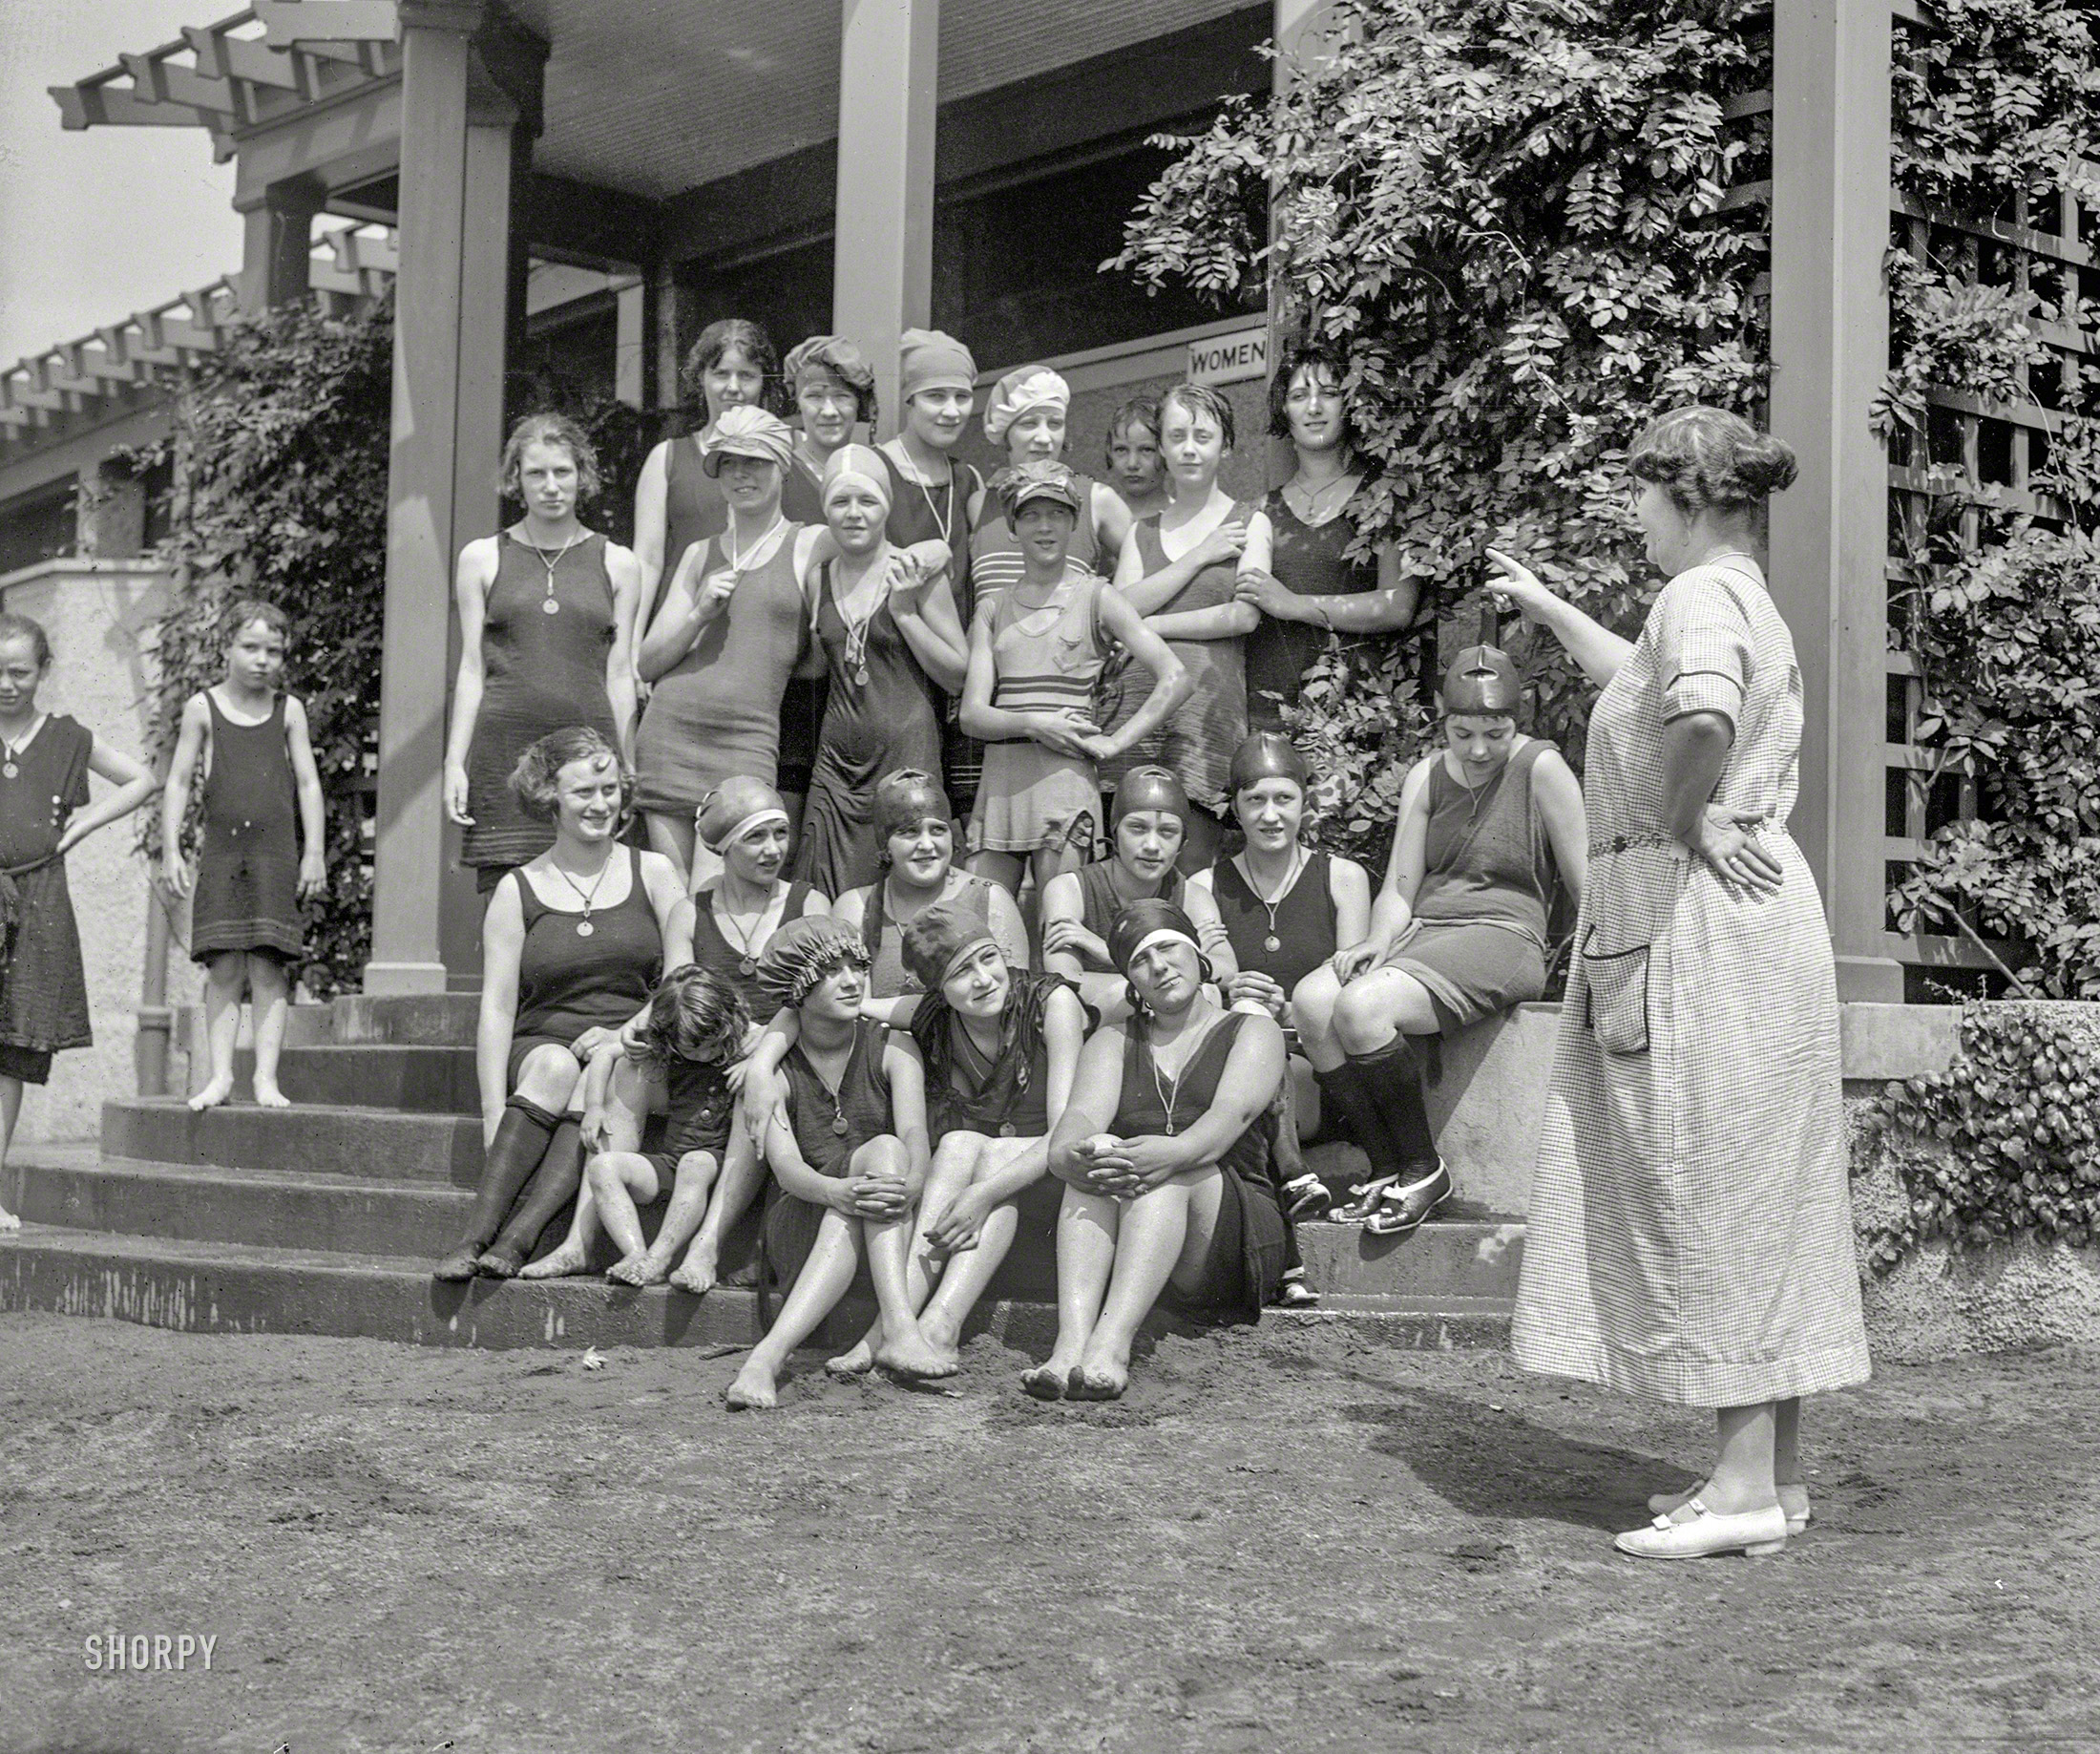 Washington, D.C. "Girls at Potomac Tidal Basin bathing beach pavilion, 5/28/23." National Photo Company Collection glass negative. View full size.